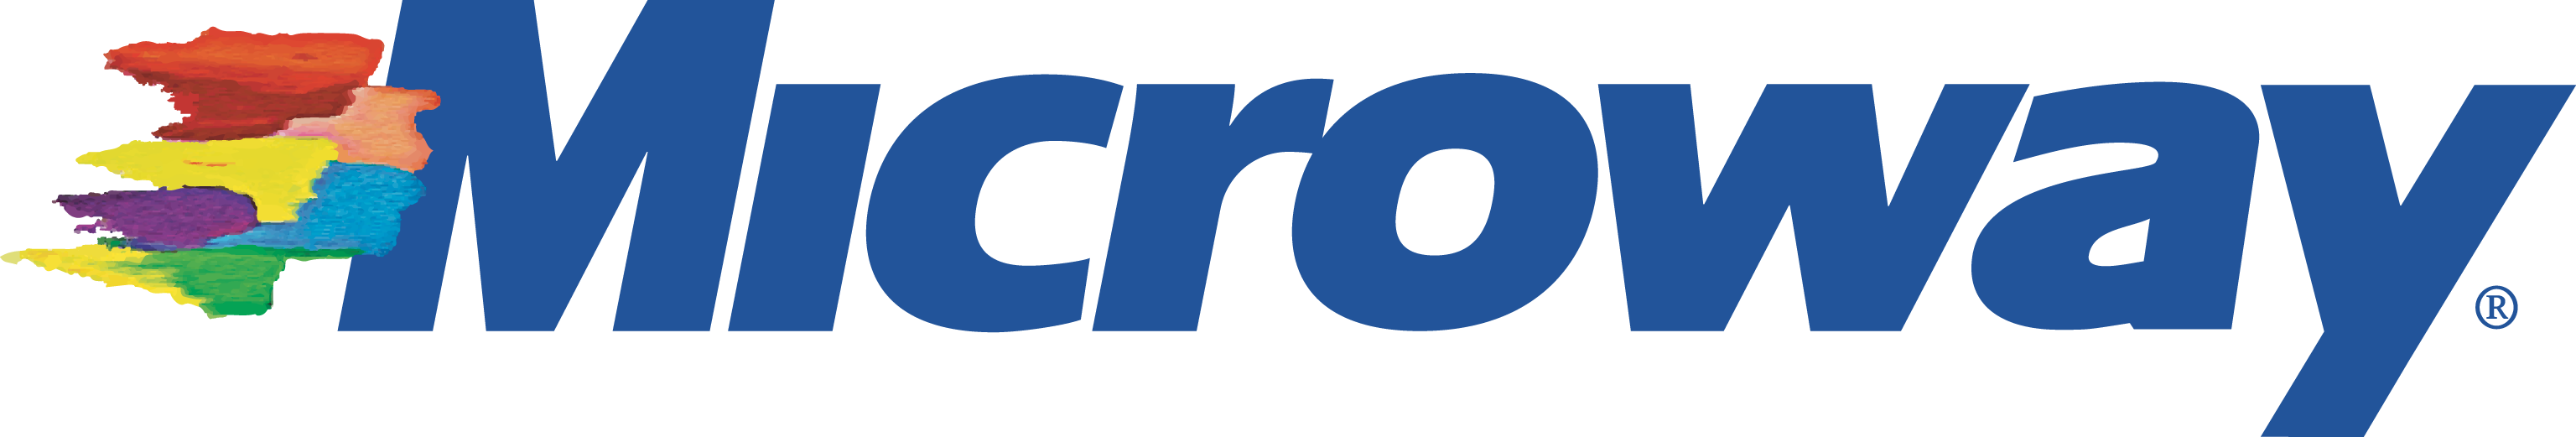 microway-logo